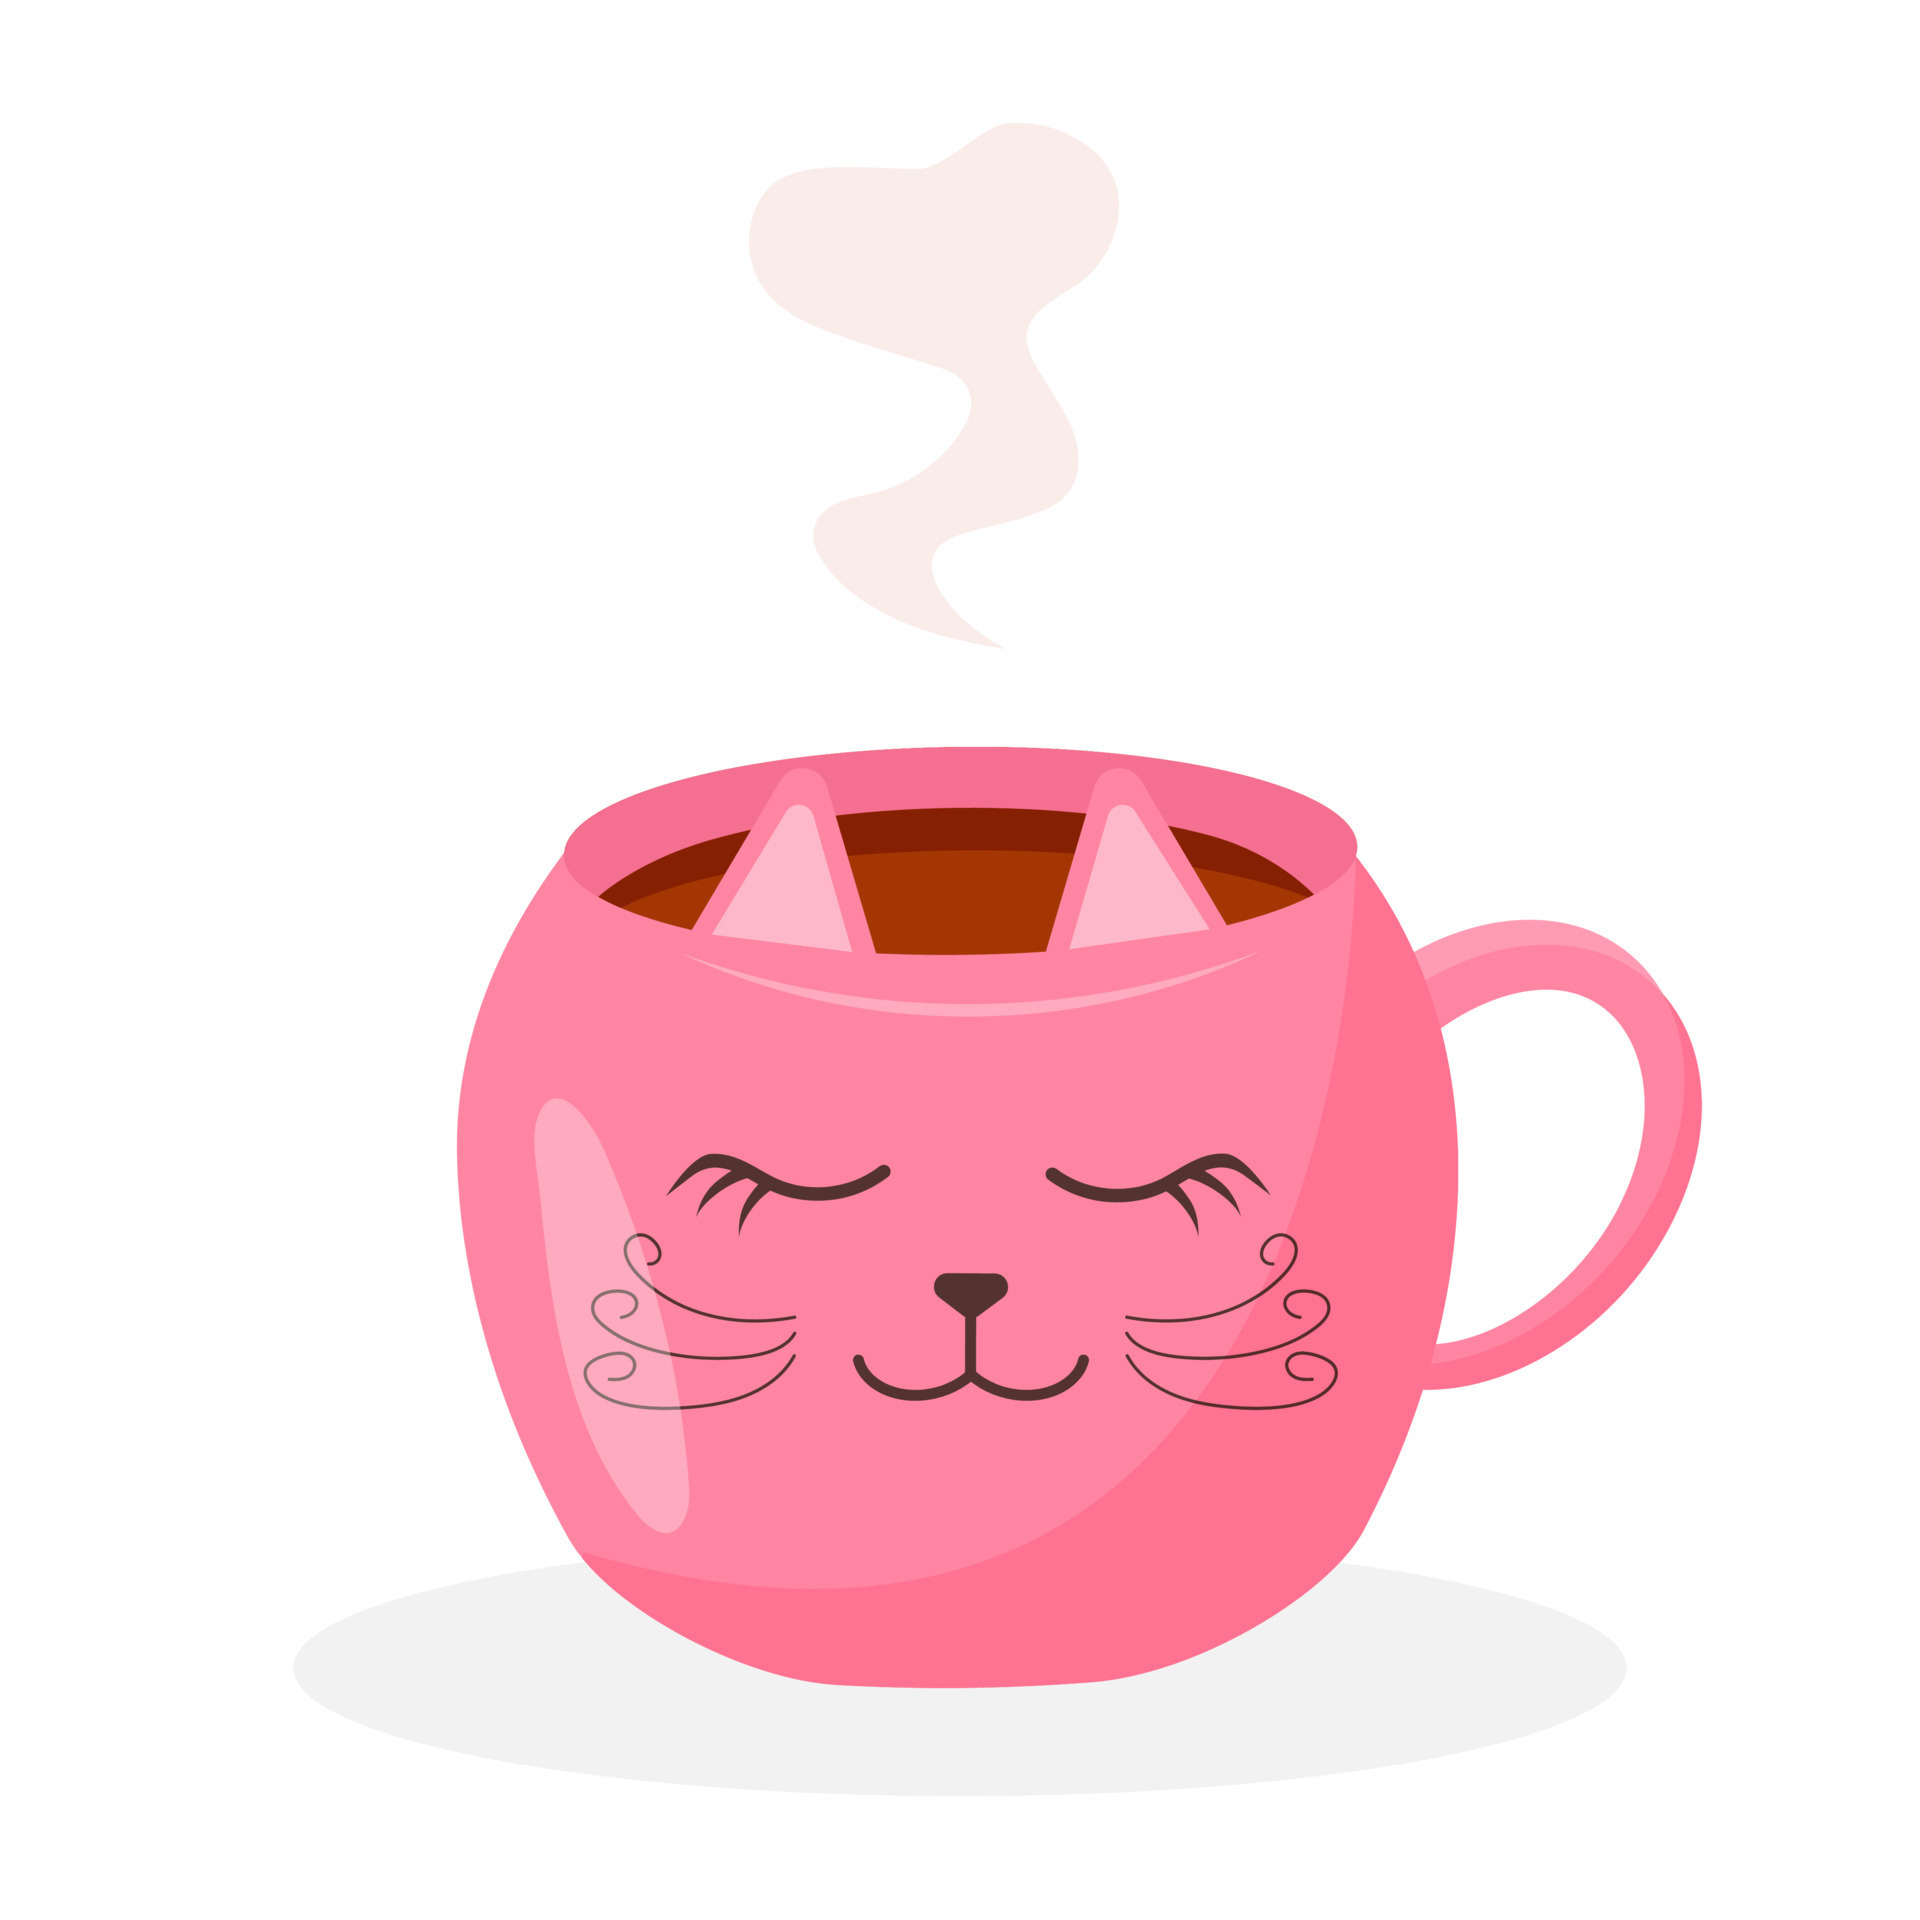 cute coffee tea cup with steam in shape of heart' Travel Mug